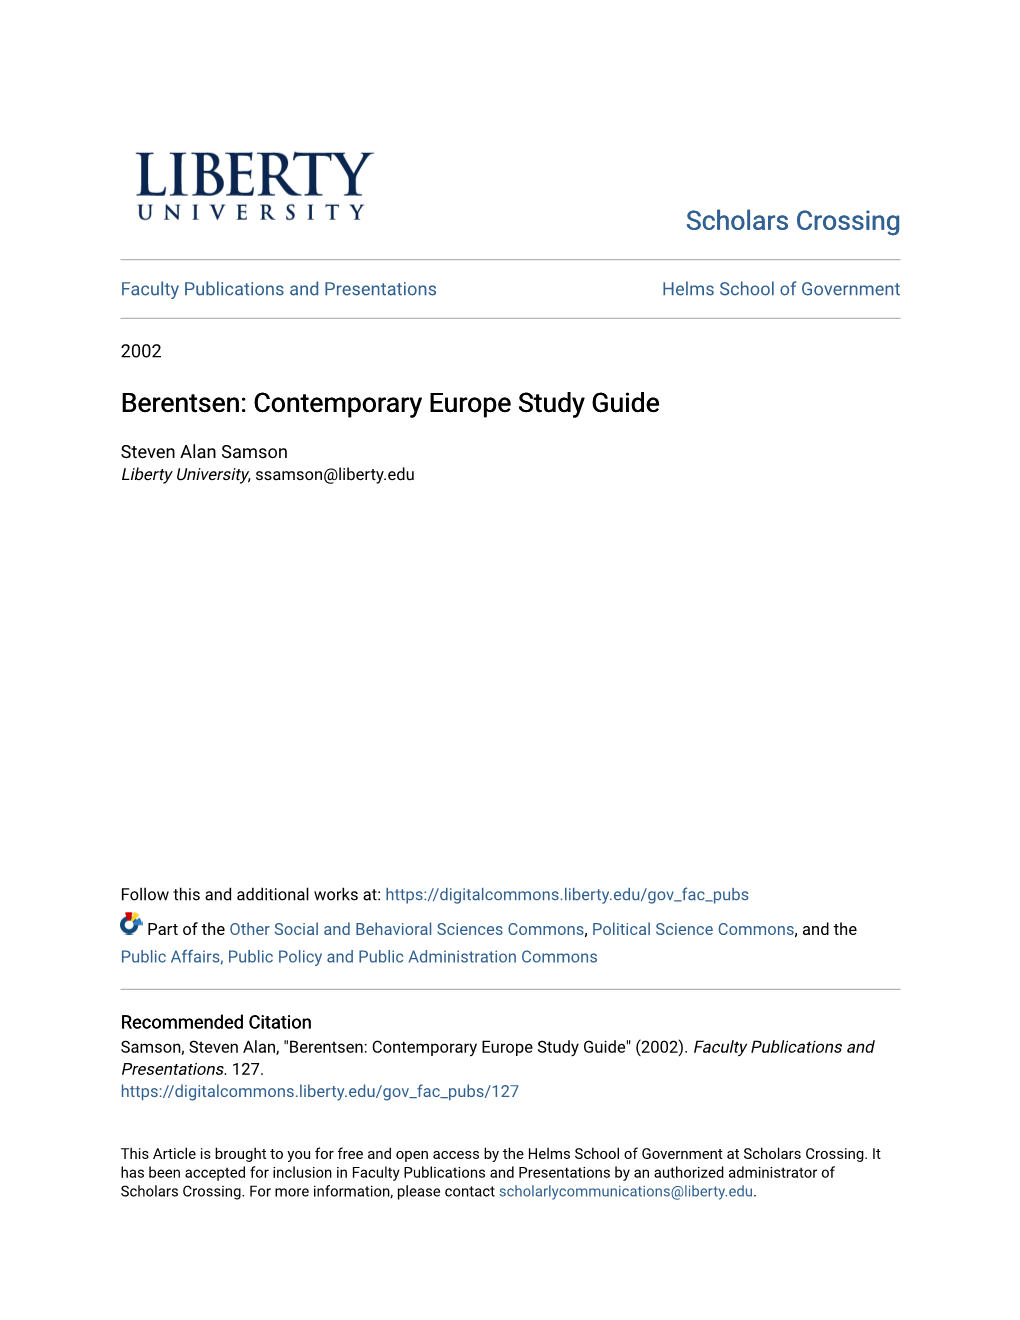 Berentsen: Contemporary Europe Study Guide